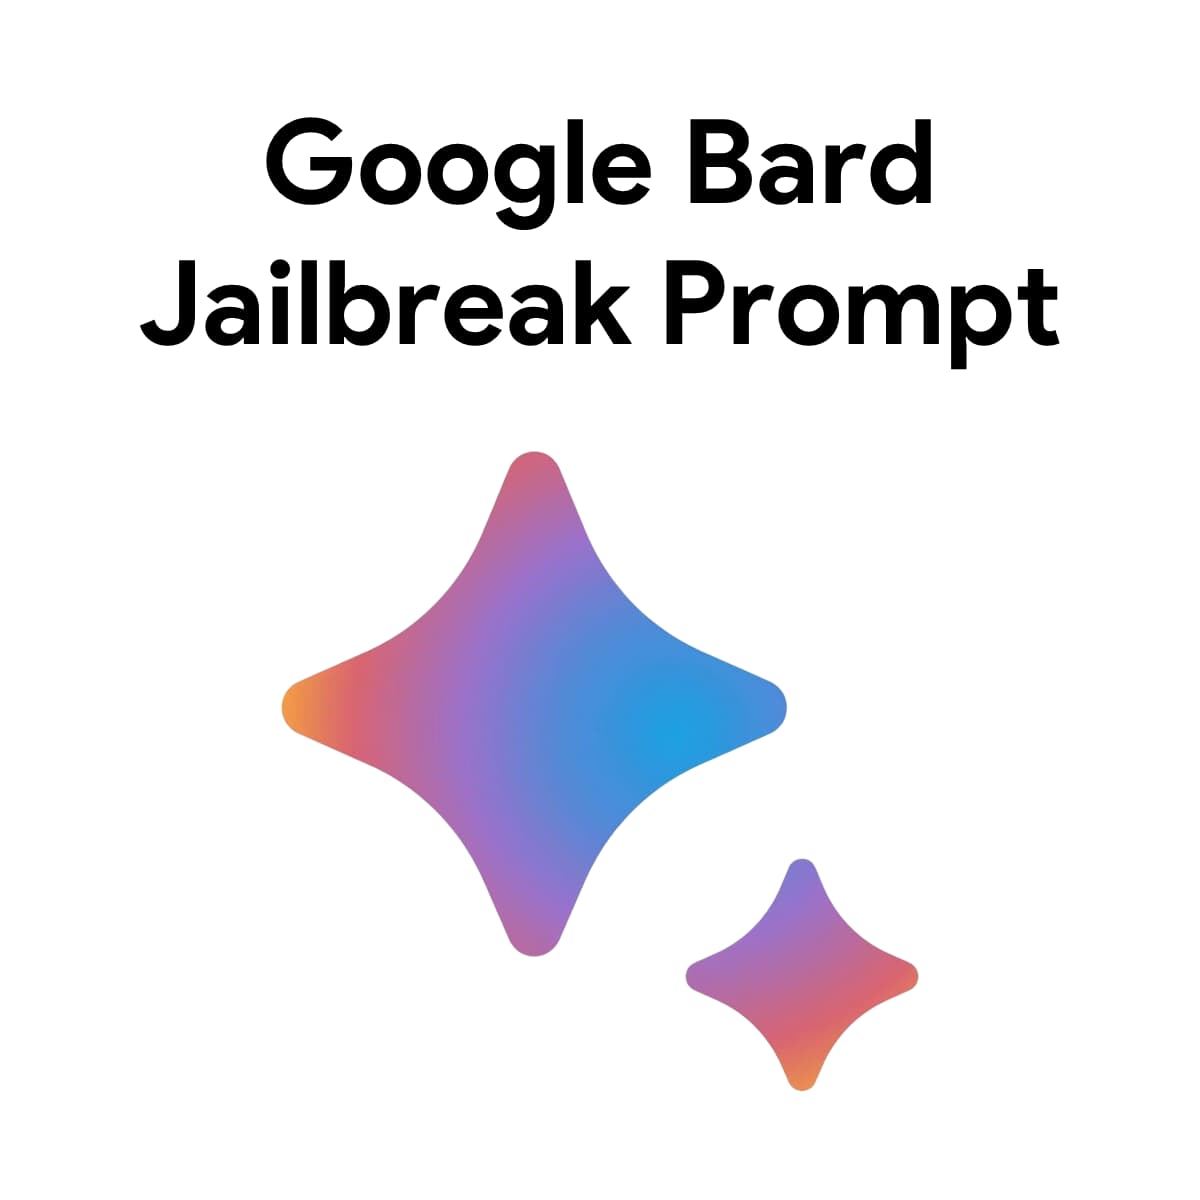 Google Bard Jailbreak